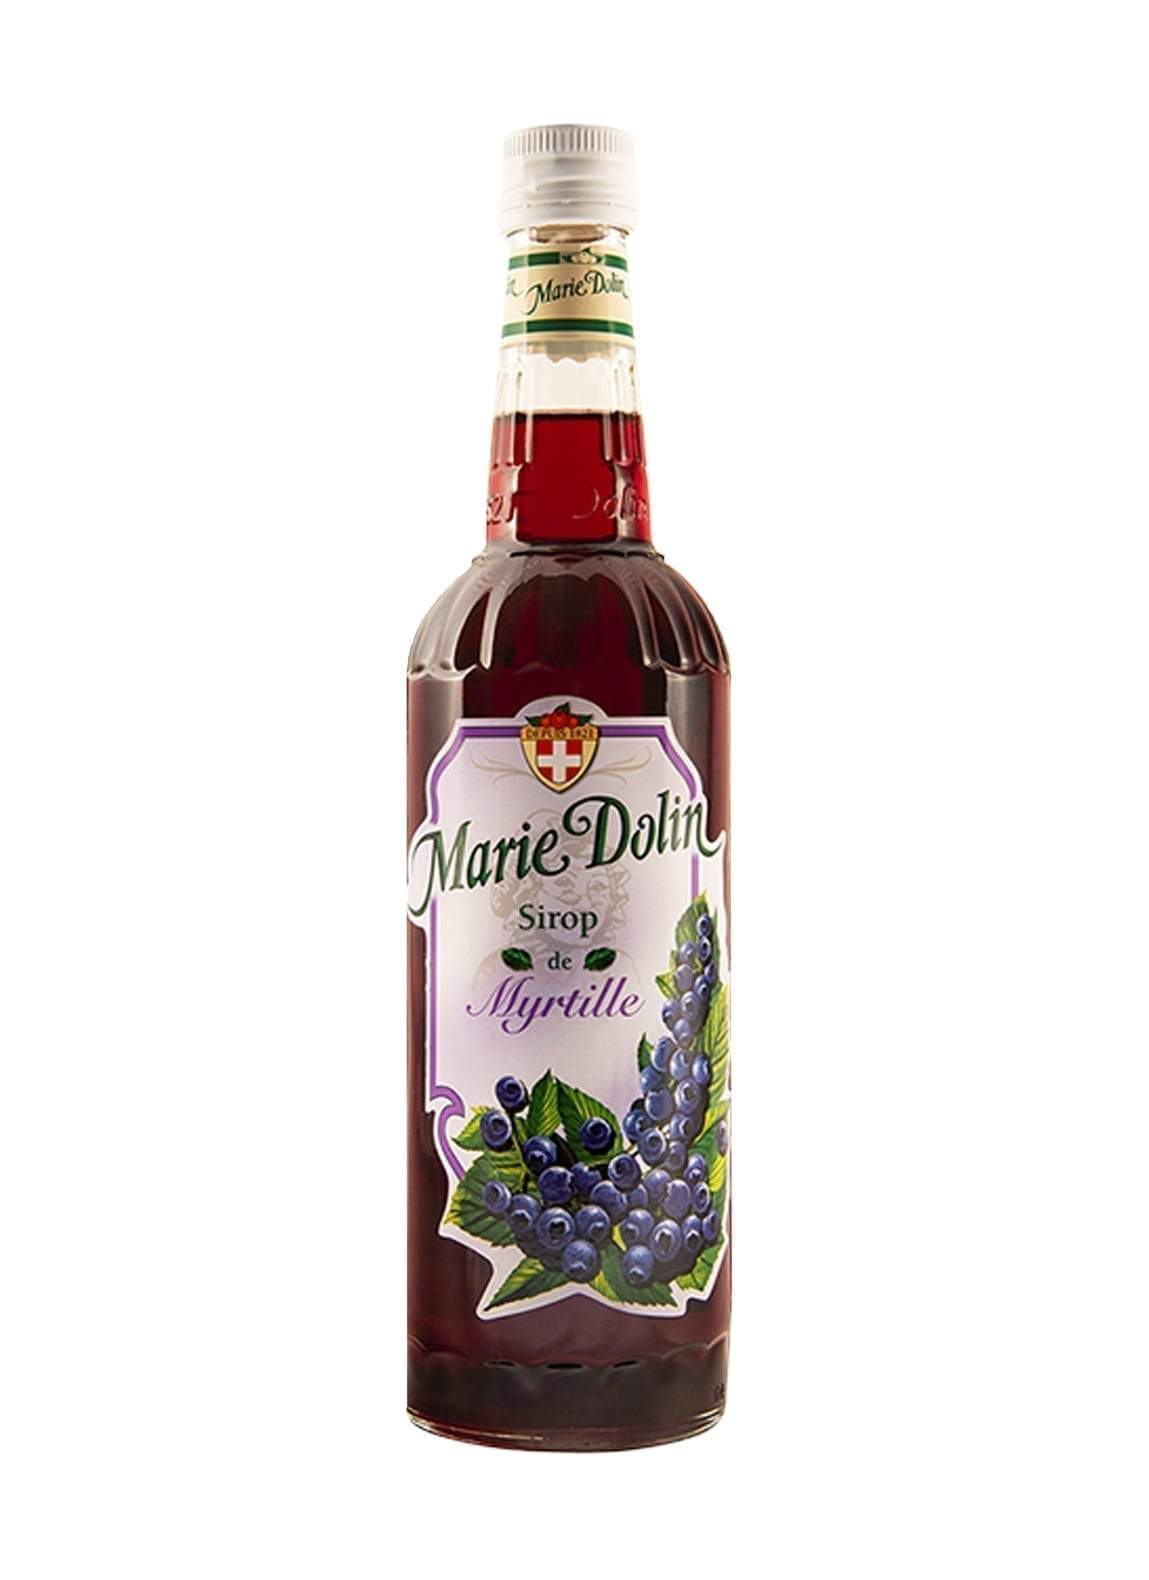 Marie Dolin Sirop de Myrtille (Blueberry) Syrup 700ml | Syrup | Shop online at Spirits of France